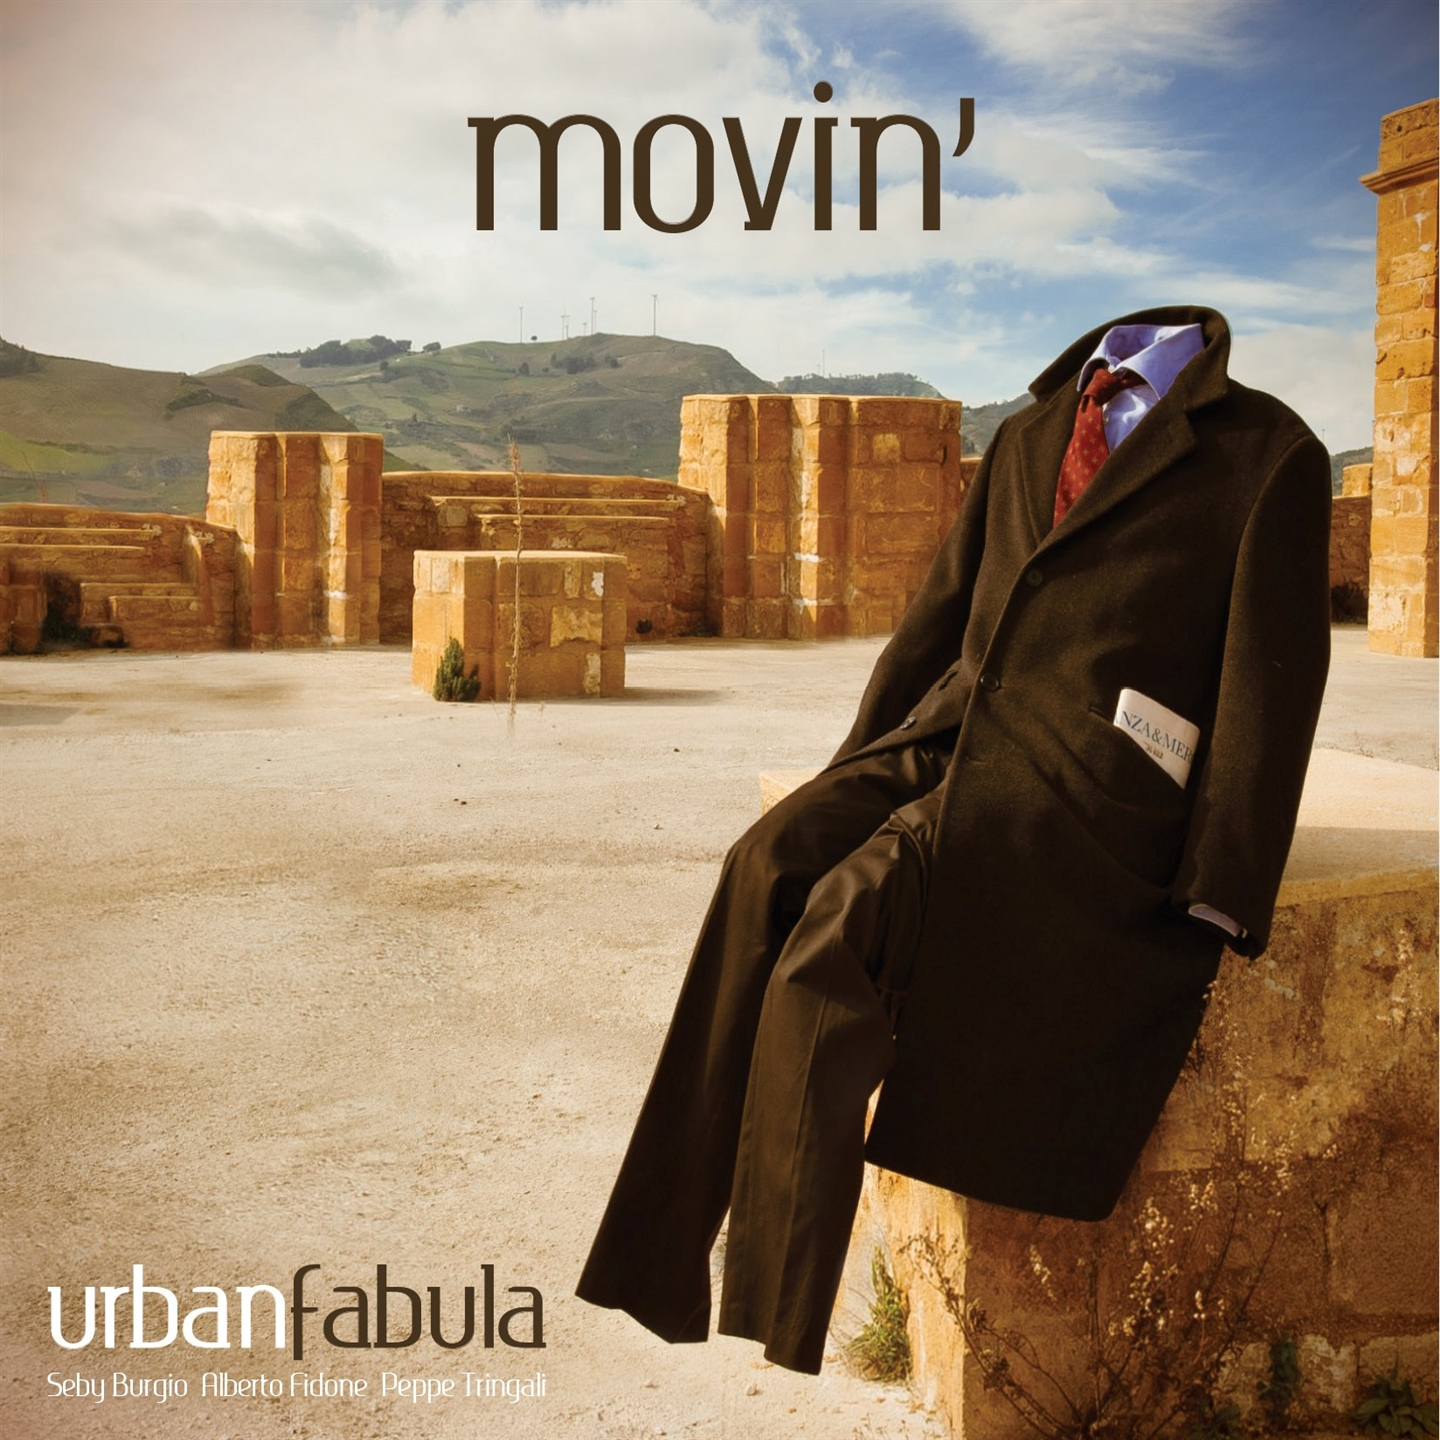 Urban Fabula - Movin' - Foto 1 di 1